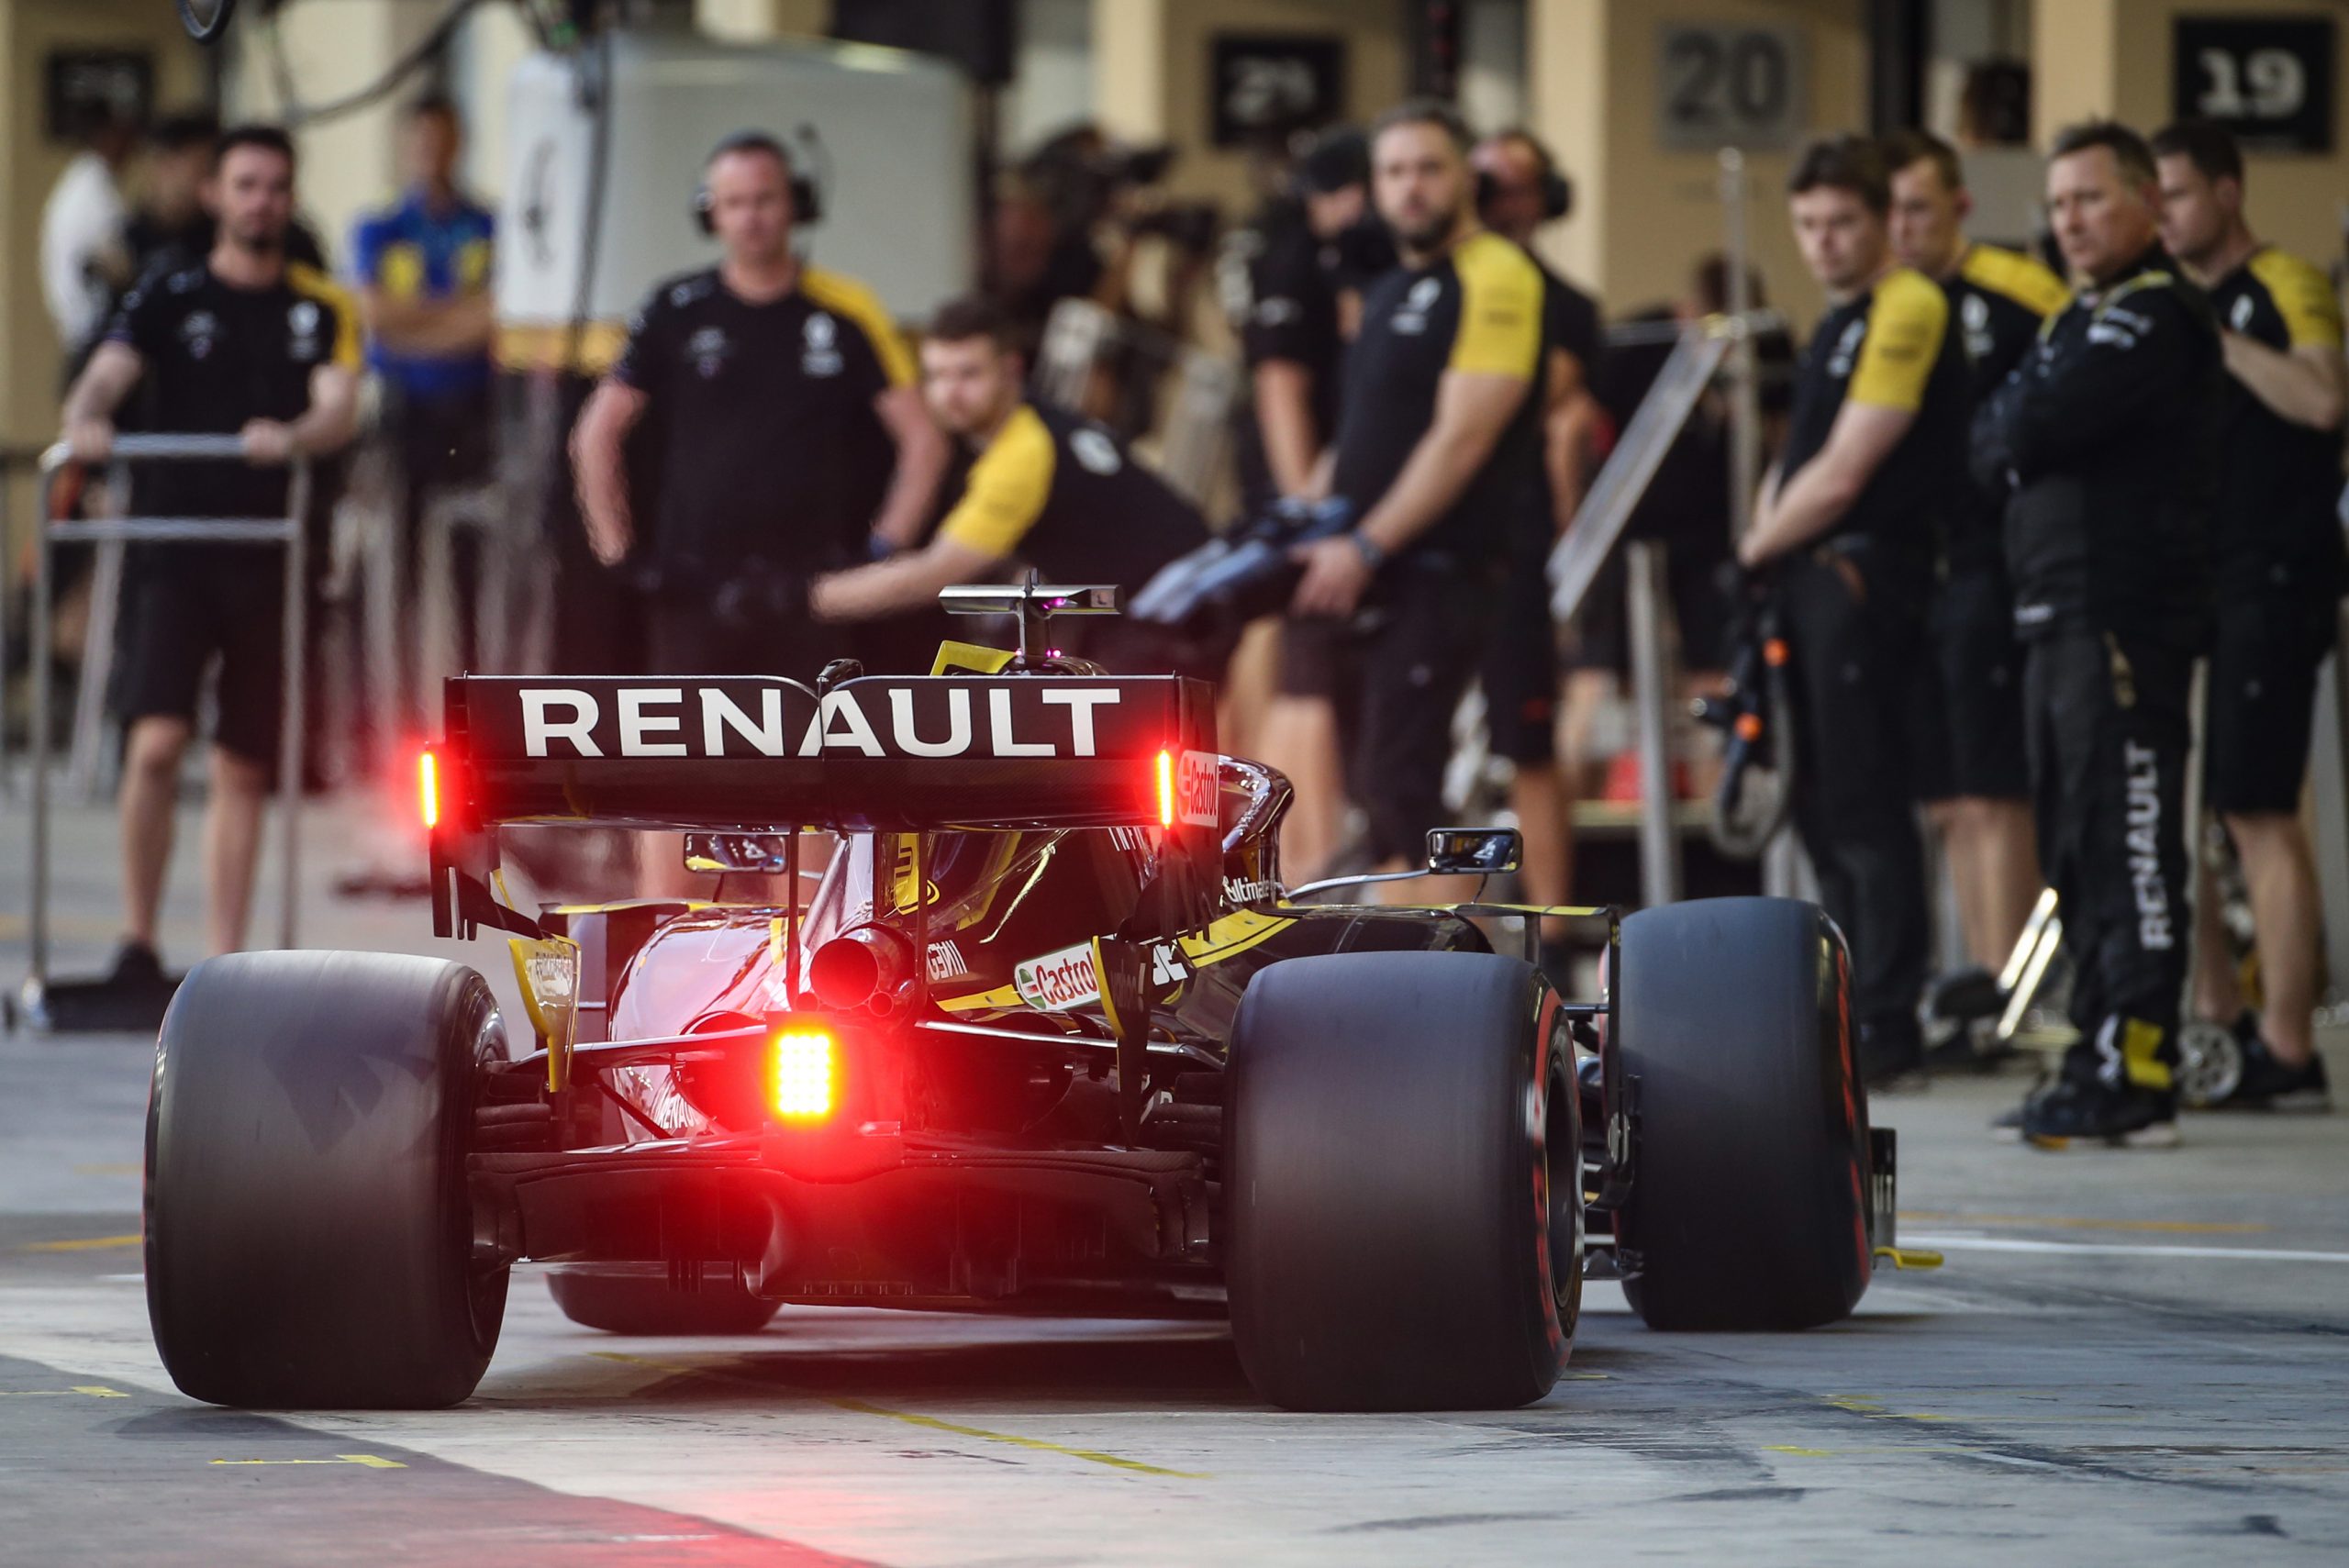 Renault GP Abou Dhabi 2019